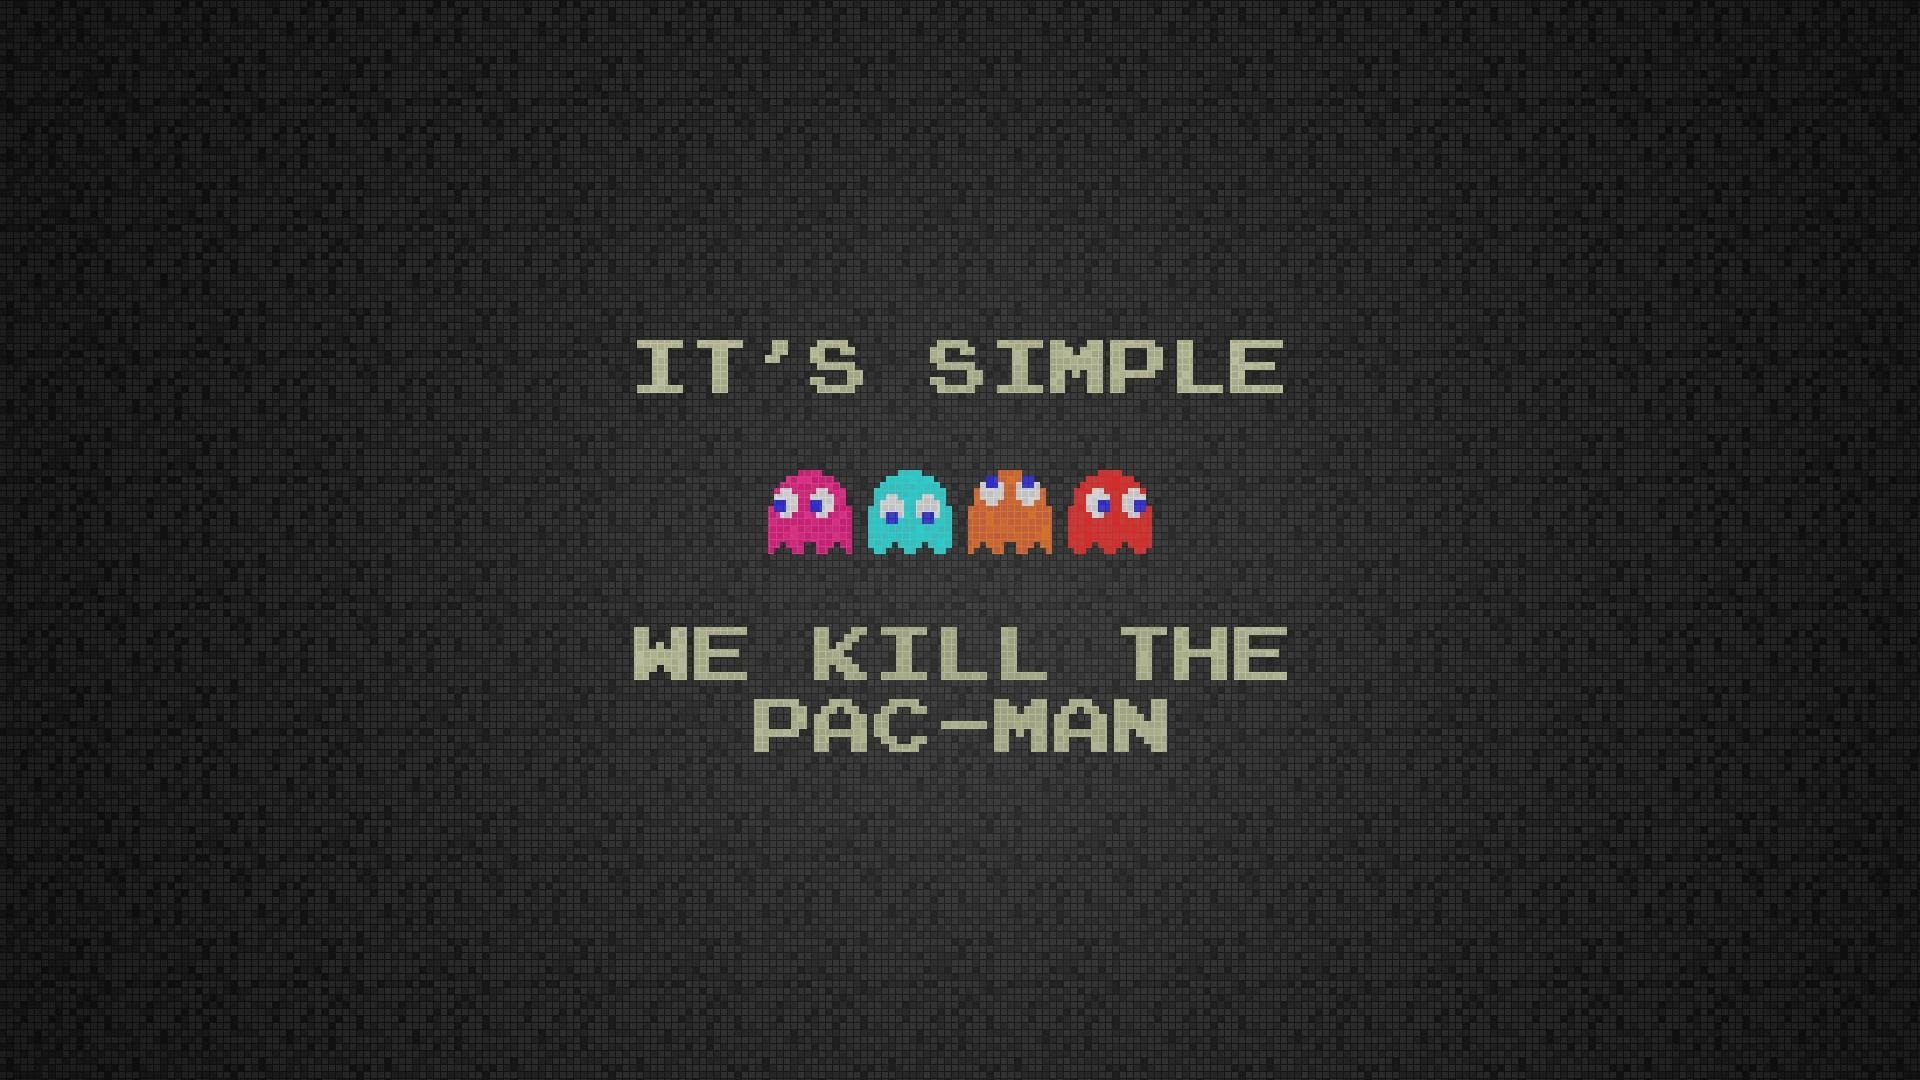 we+kill+the+pac-man